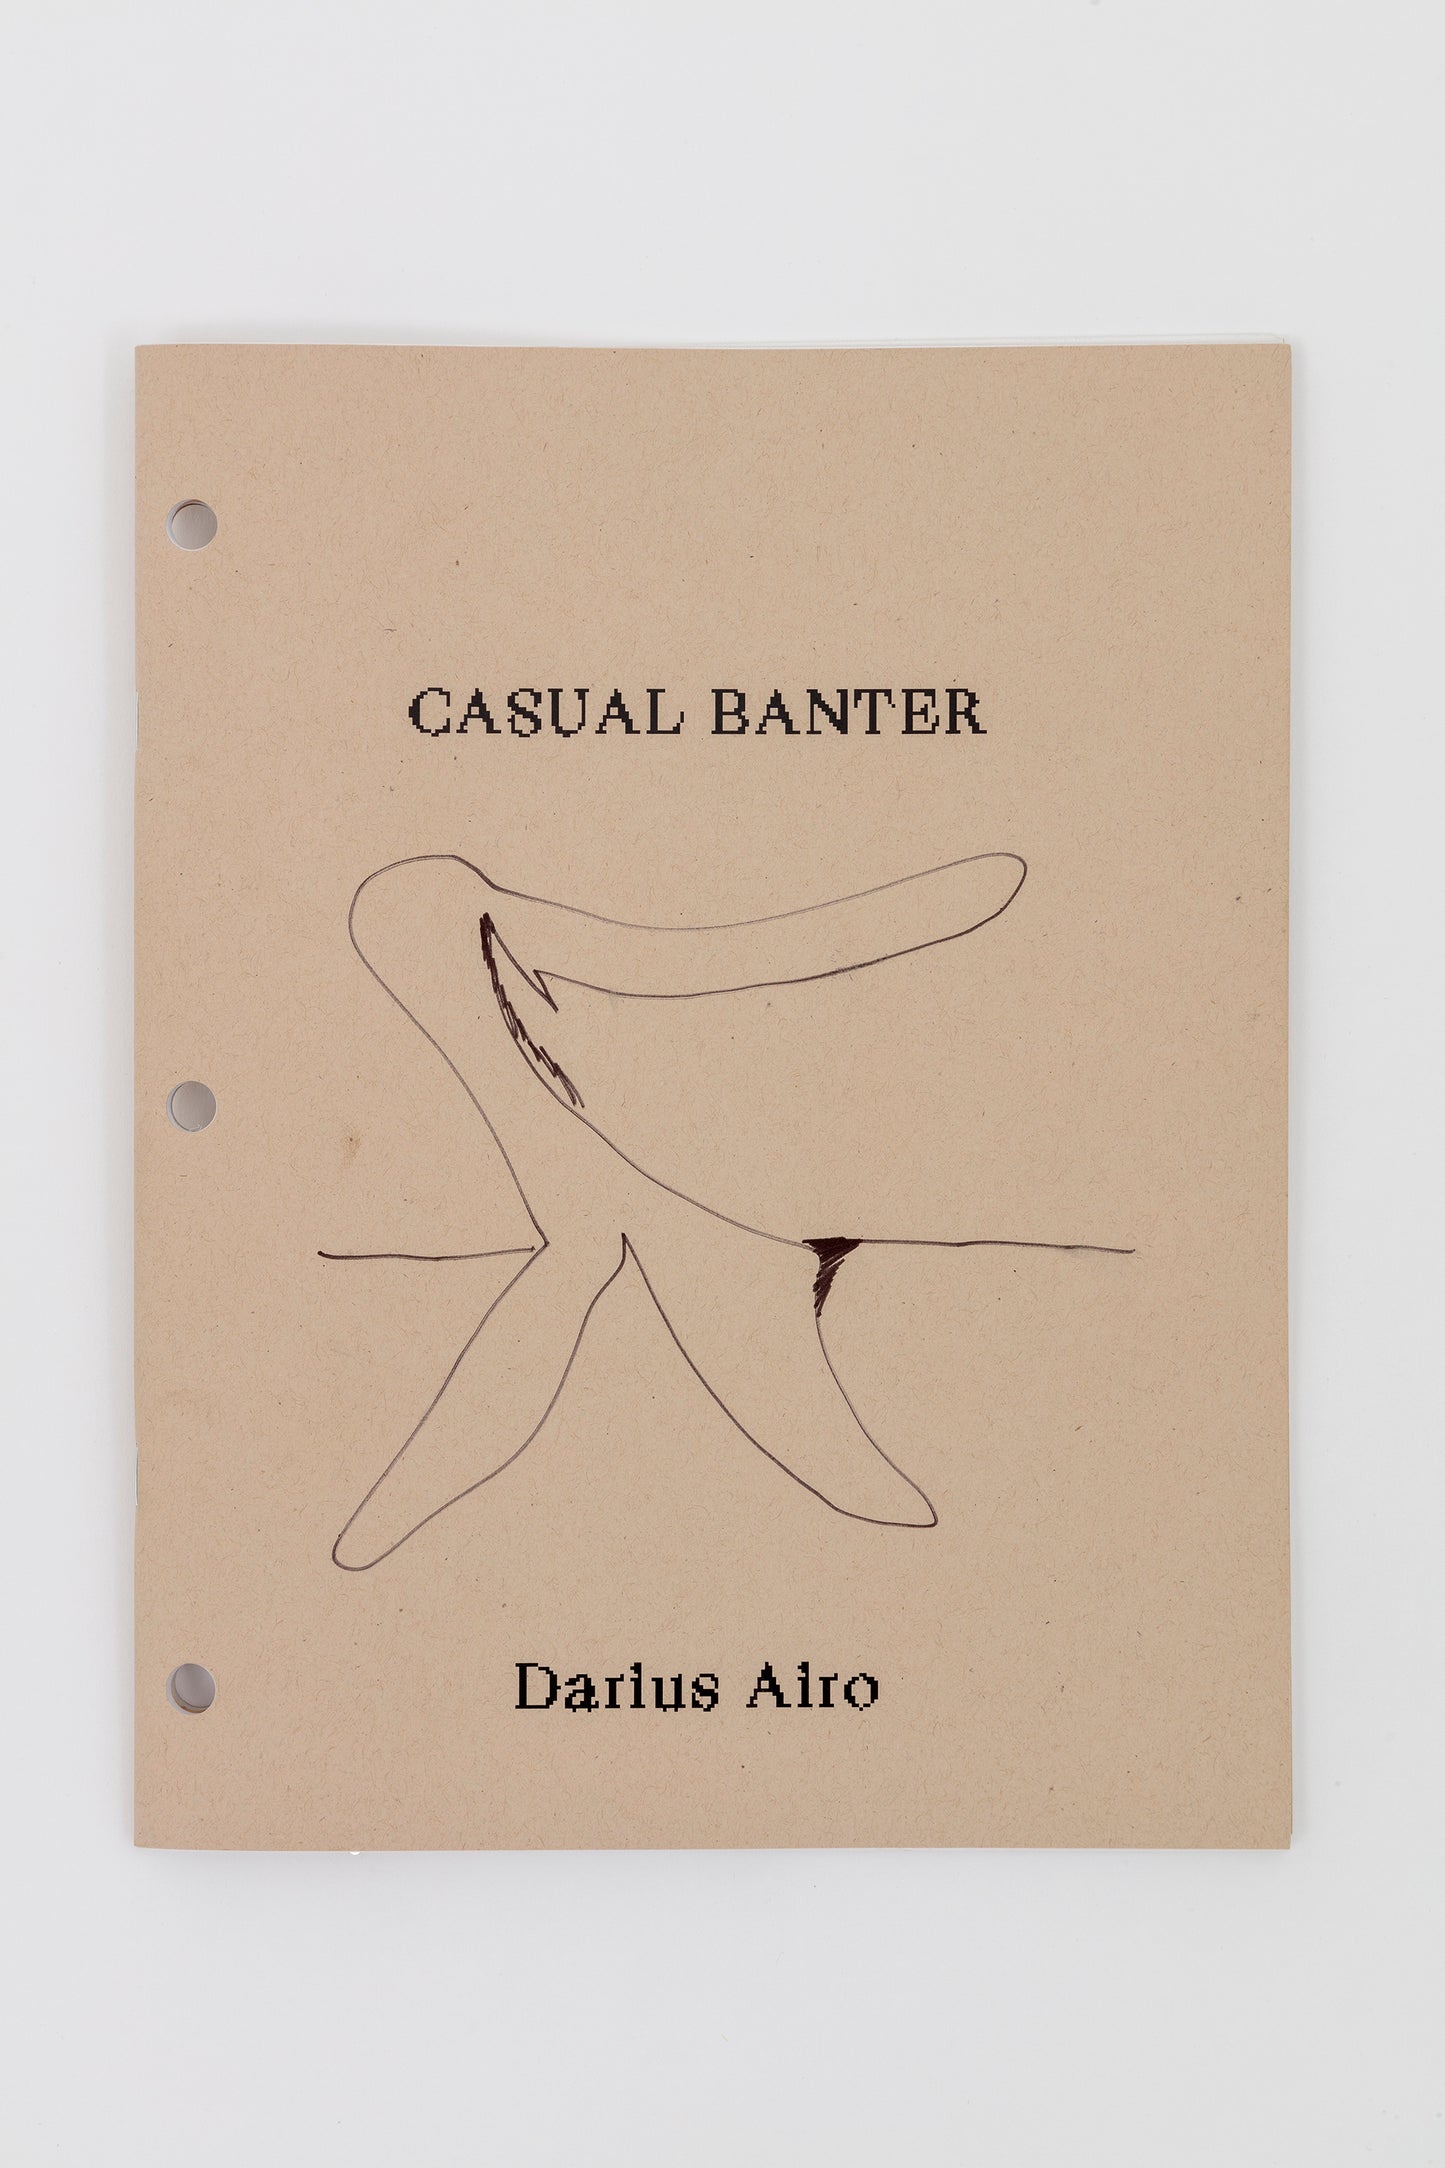 Darius Airo “Casual Banter” zine #s 1-50 (w/drawings)